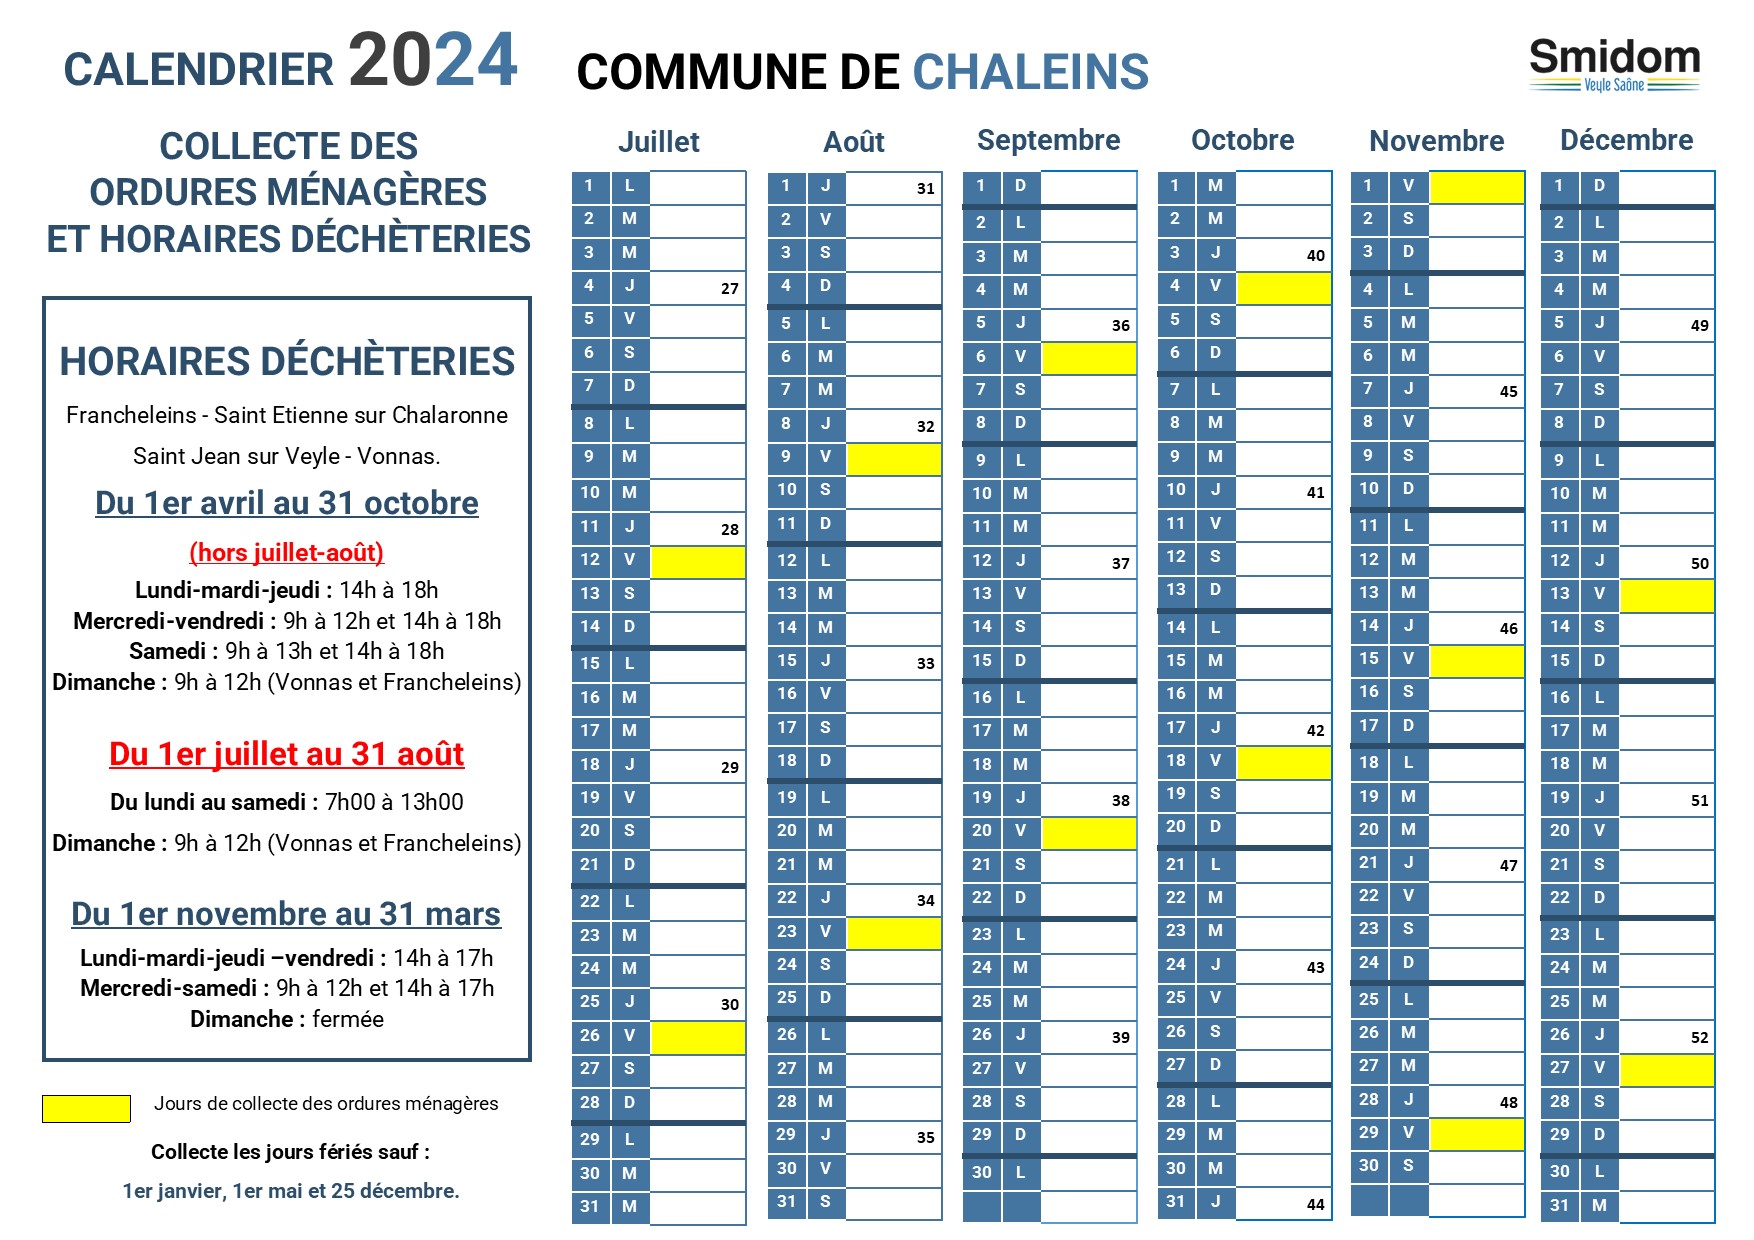 CHALEINS - Calendrier 2024 - 2.jpg